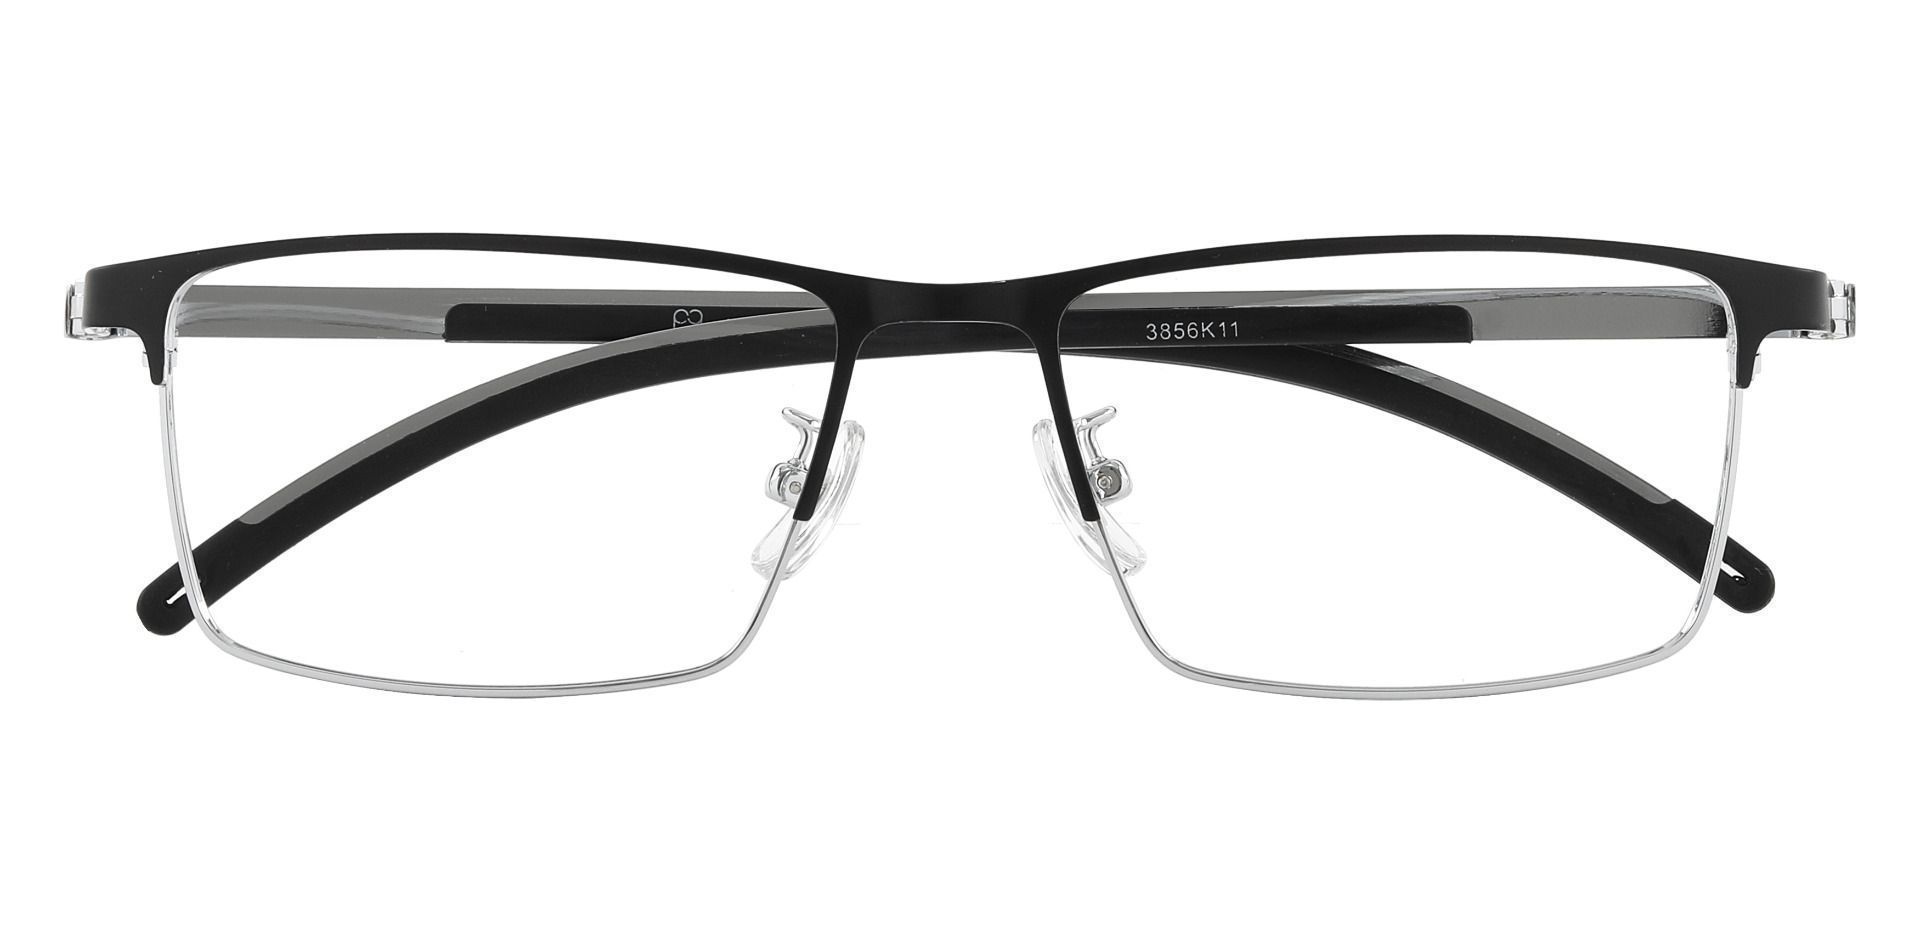 Extra Large Frame For Executive Bifocals, 8x35 Trifocals-, 59% OFF